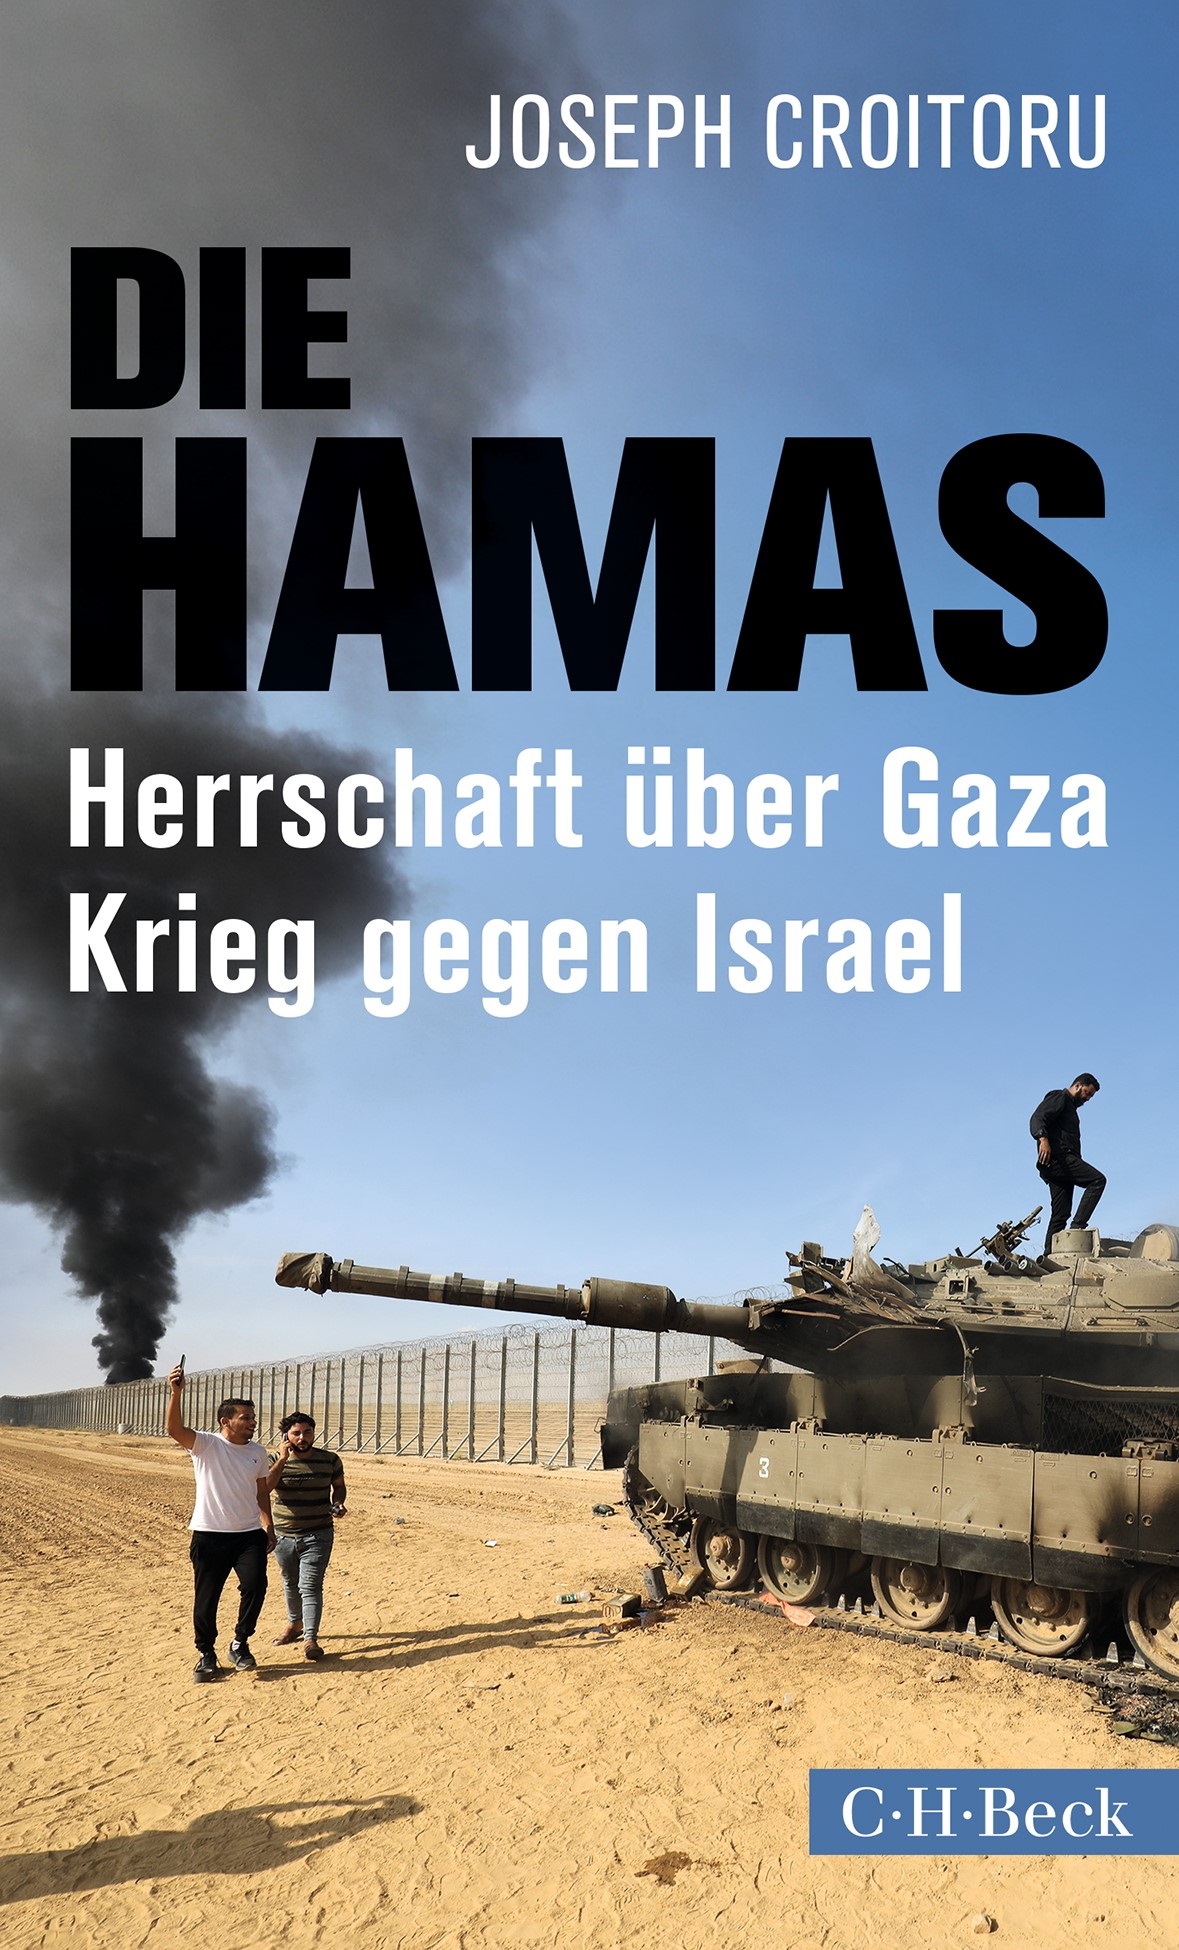 Cover of Joseph Croitoru's book "Die Hamas. Herrschaft über Gaza, Krieg gegen Israel"